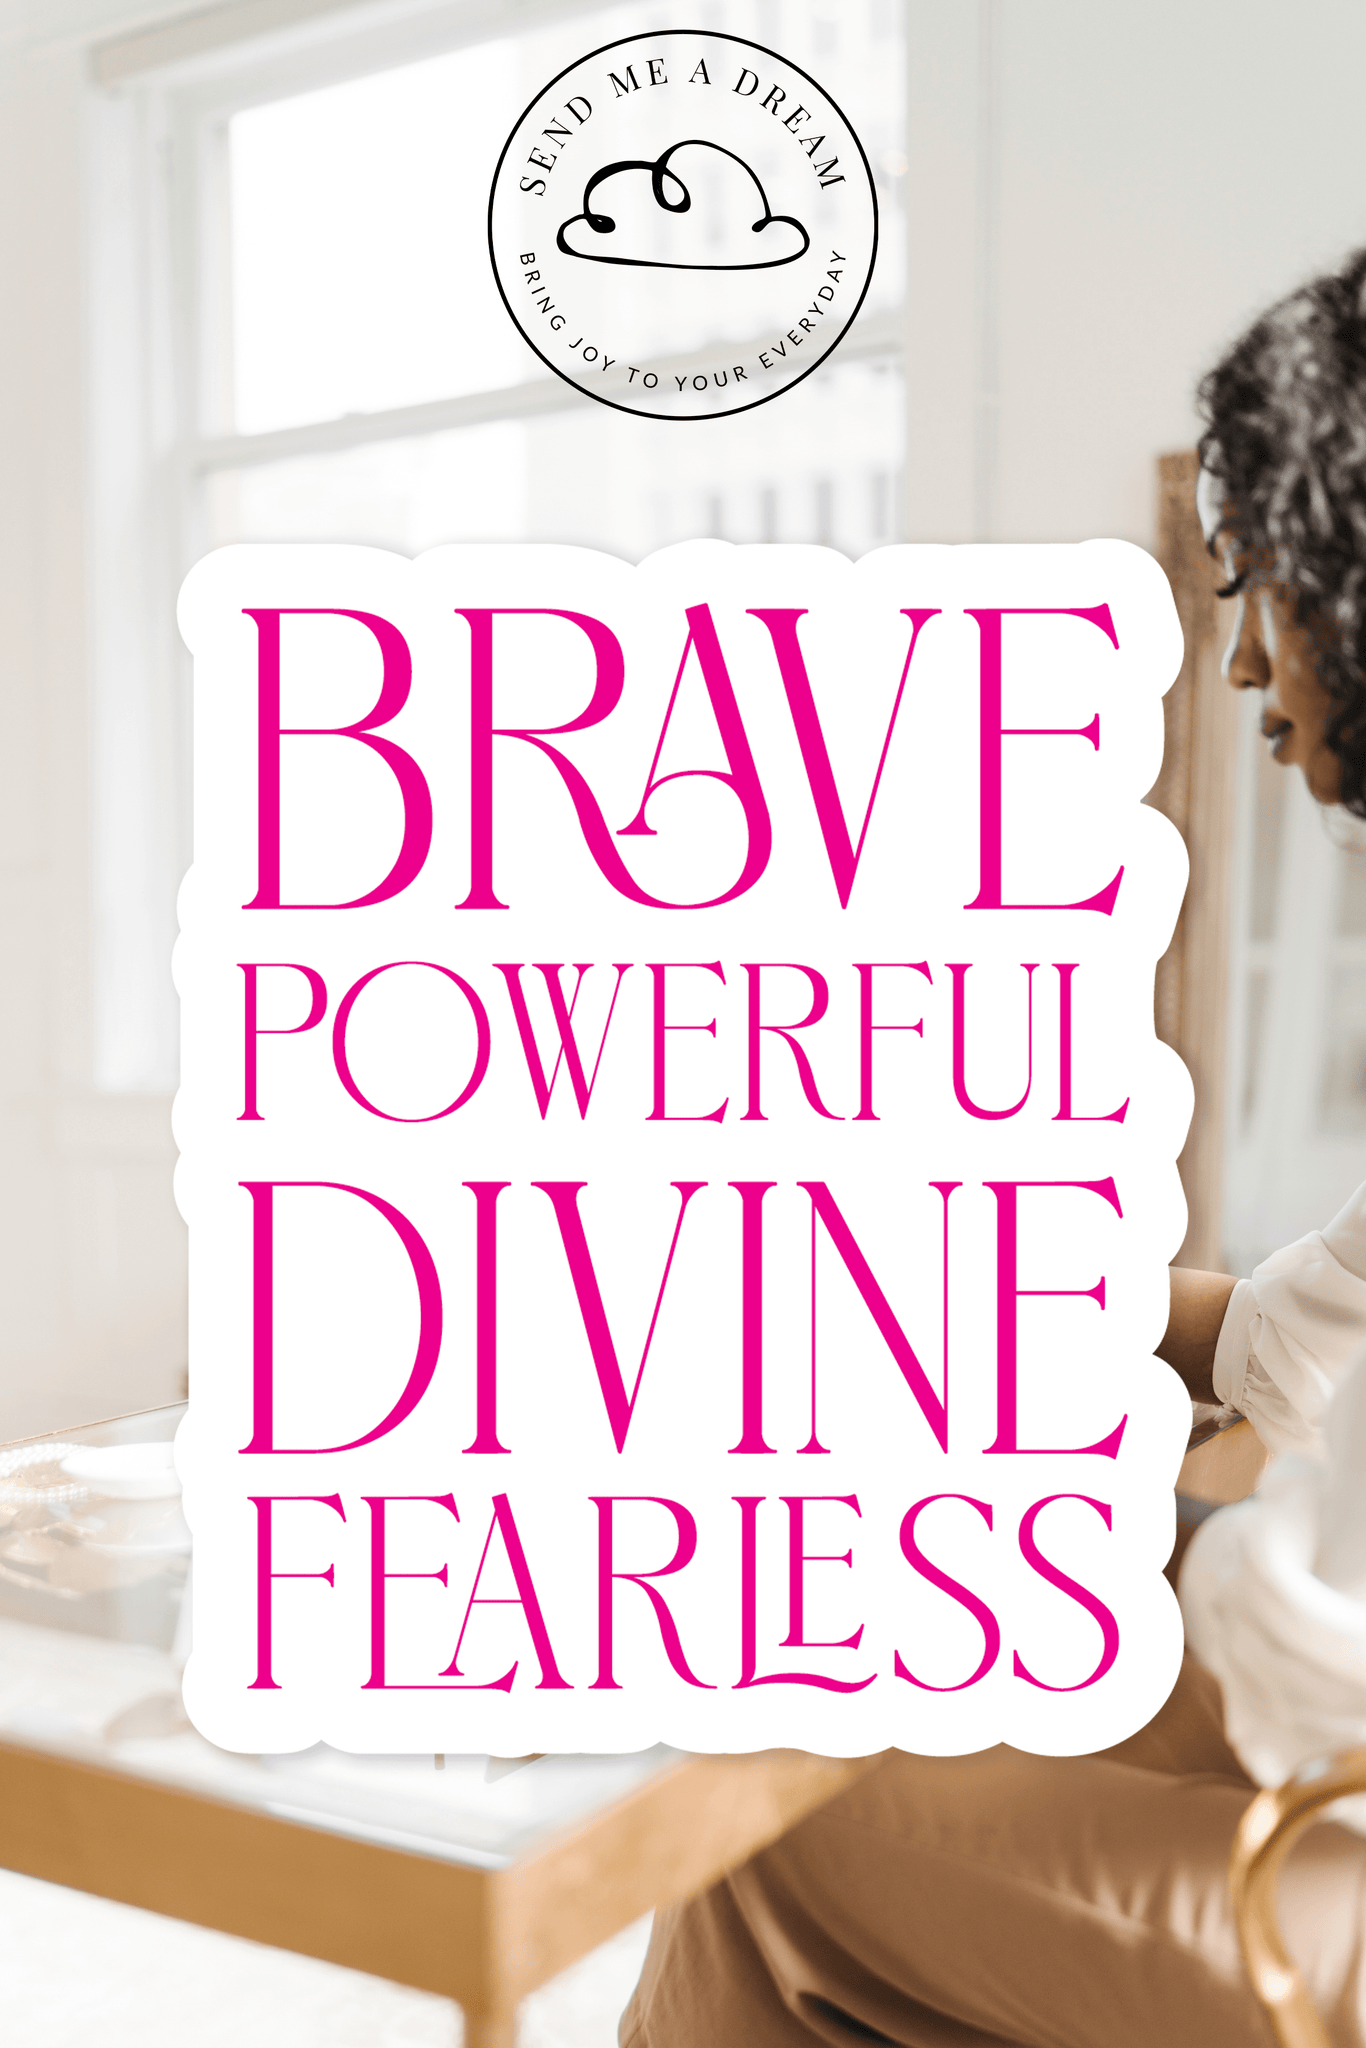 Sticker Brave powerful divine fearless, gift for friend, encouragement gift